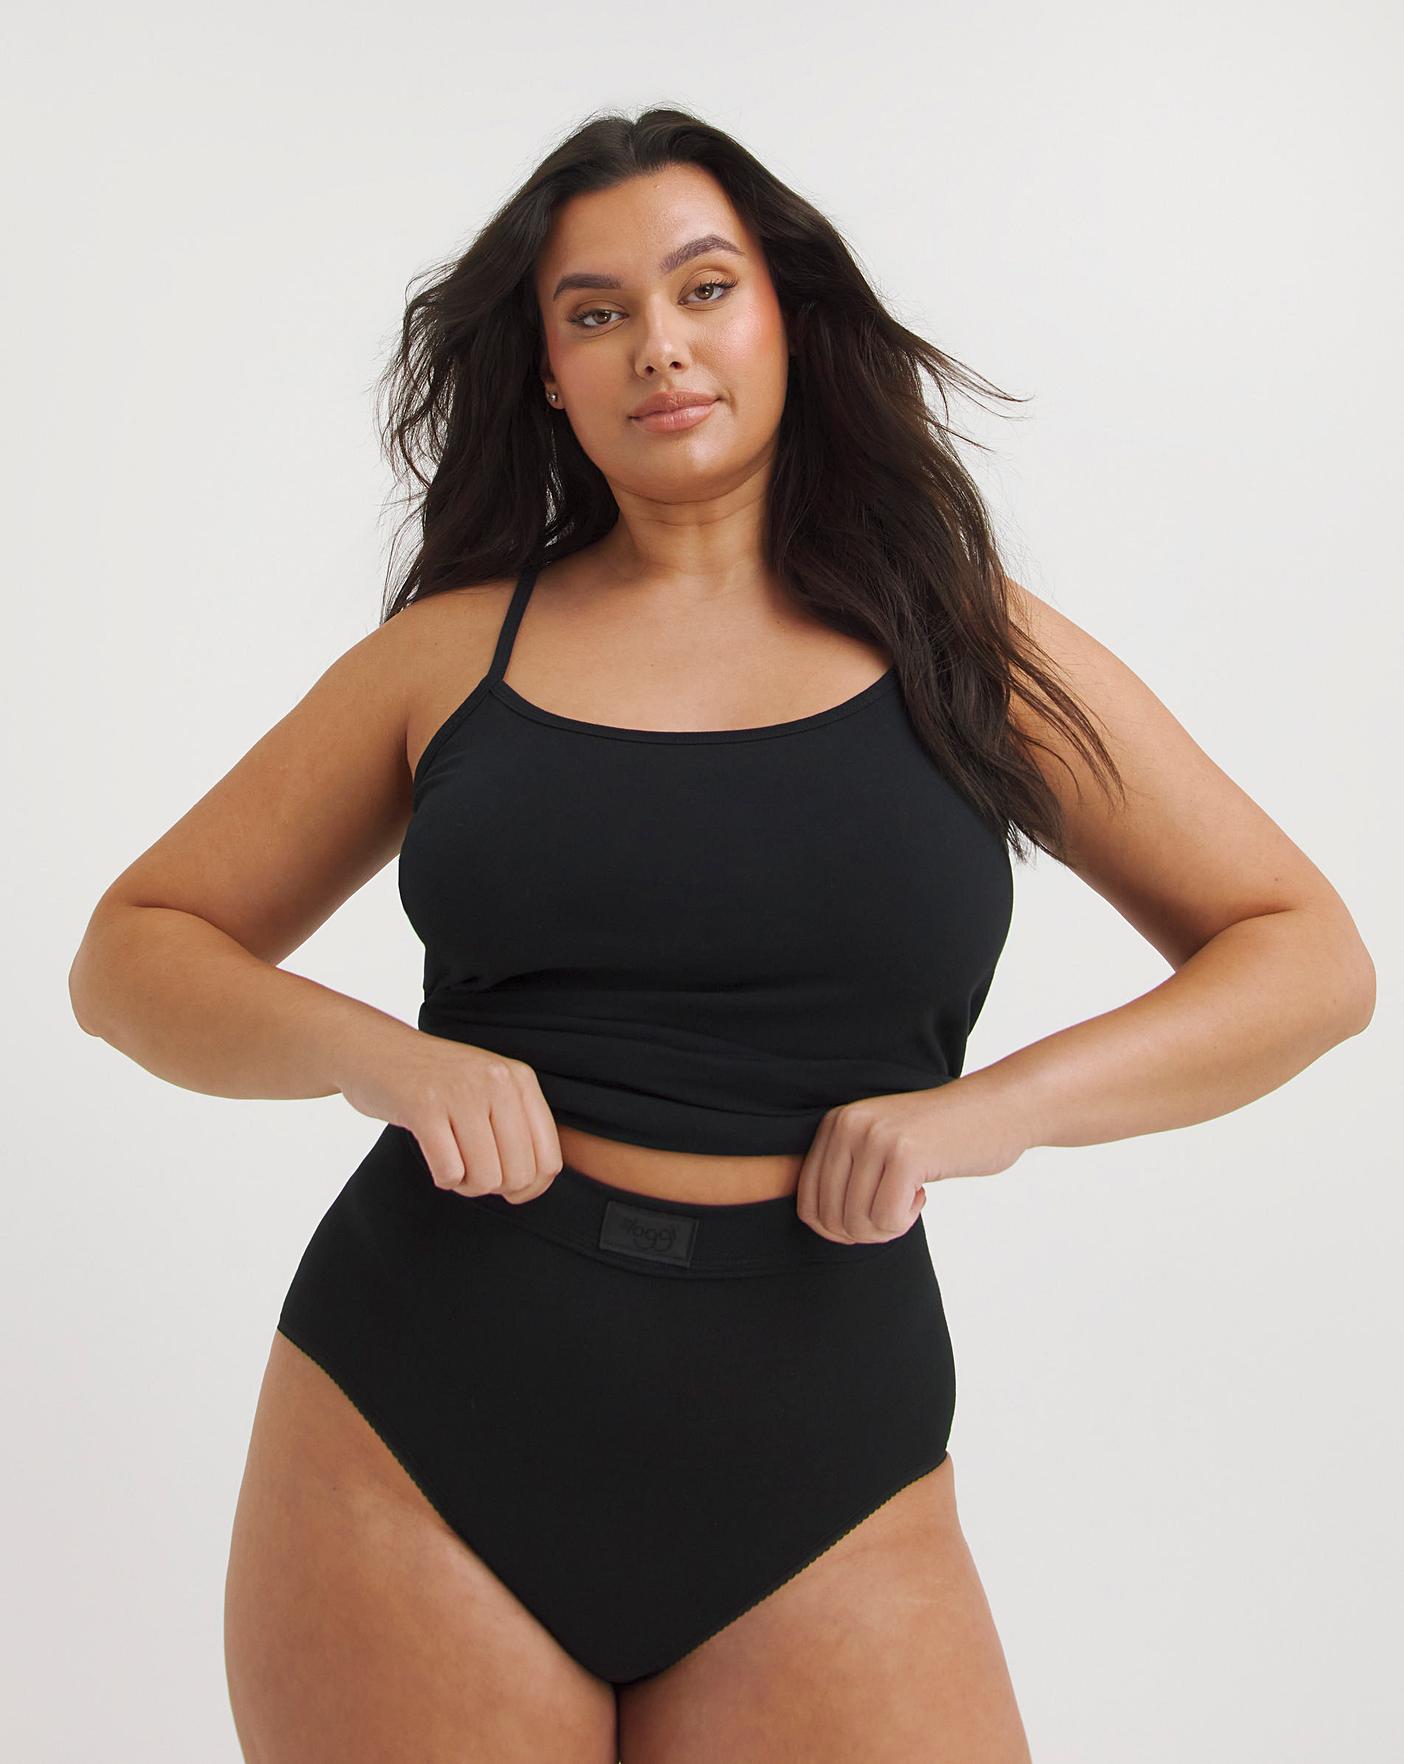 SLOGGI WOMEN'S DOUBLE Comfort Maxi 2p Underwear, Black, uk size 18